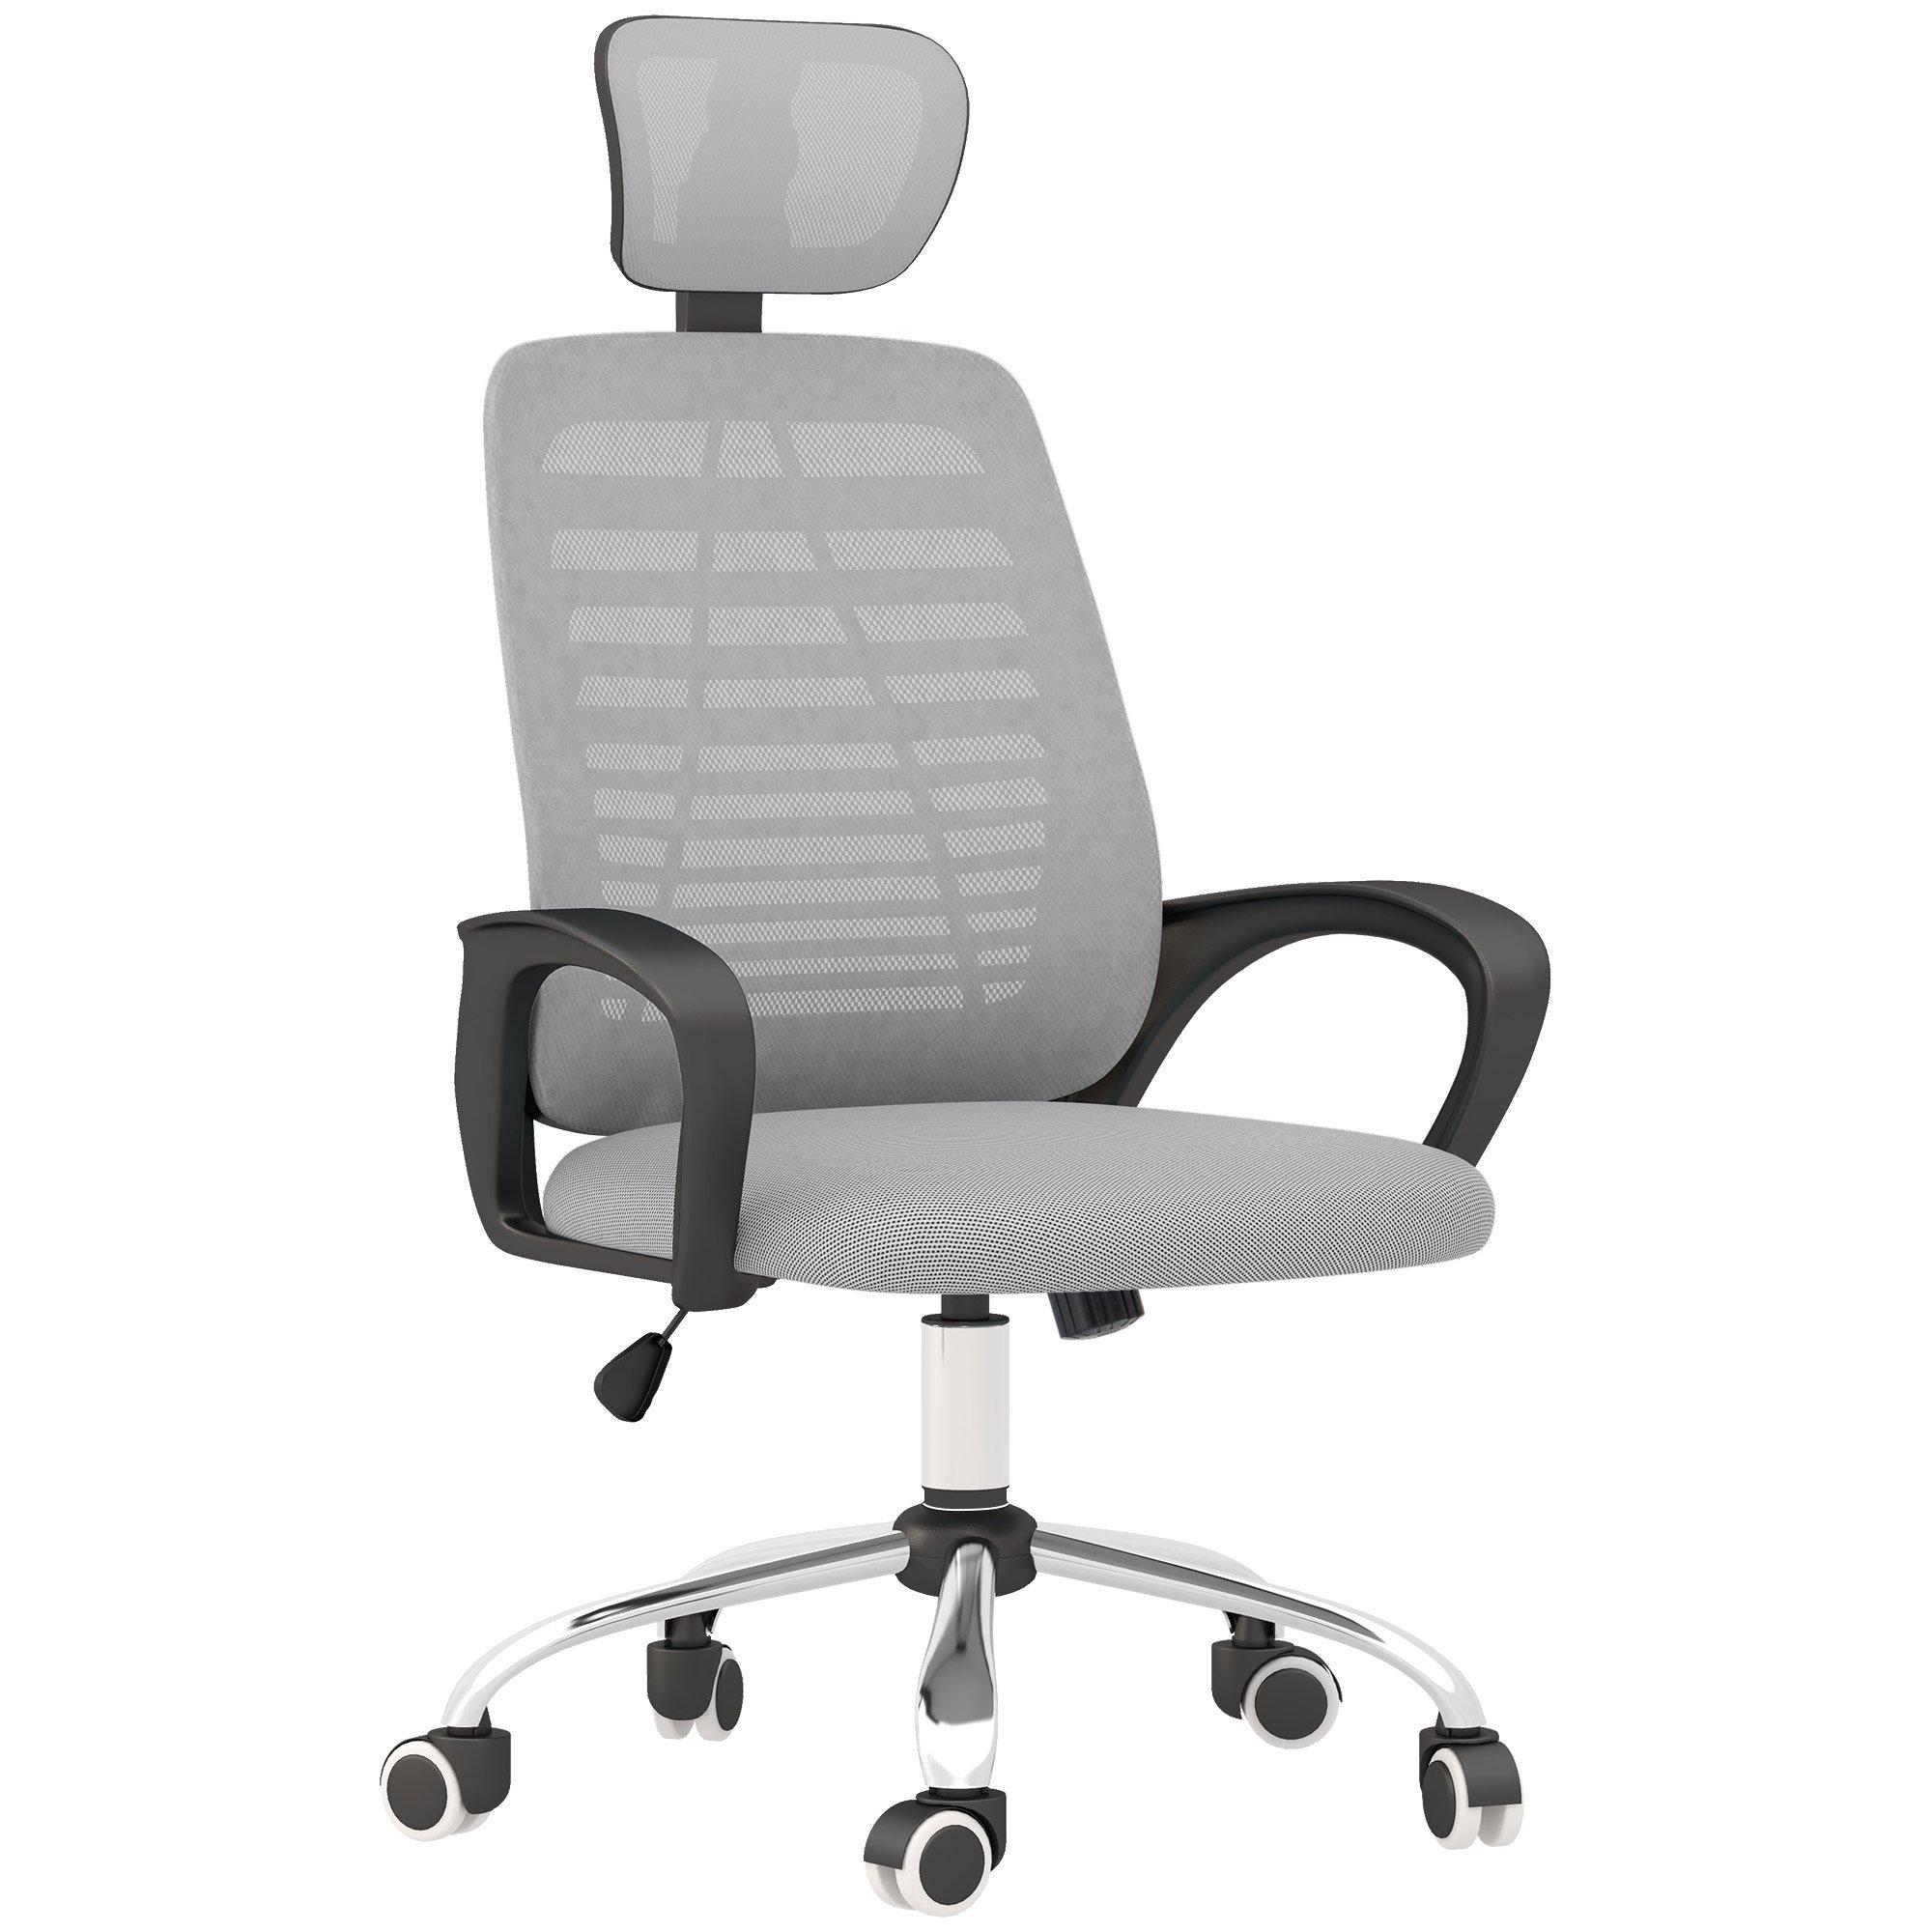 Ergonomic Mesh Office Chair with Adjustable Headrest